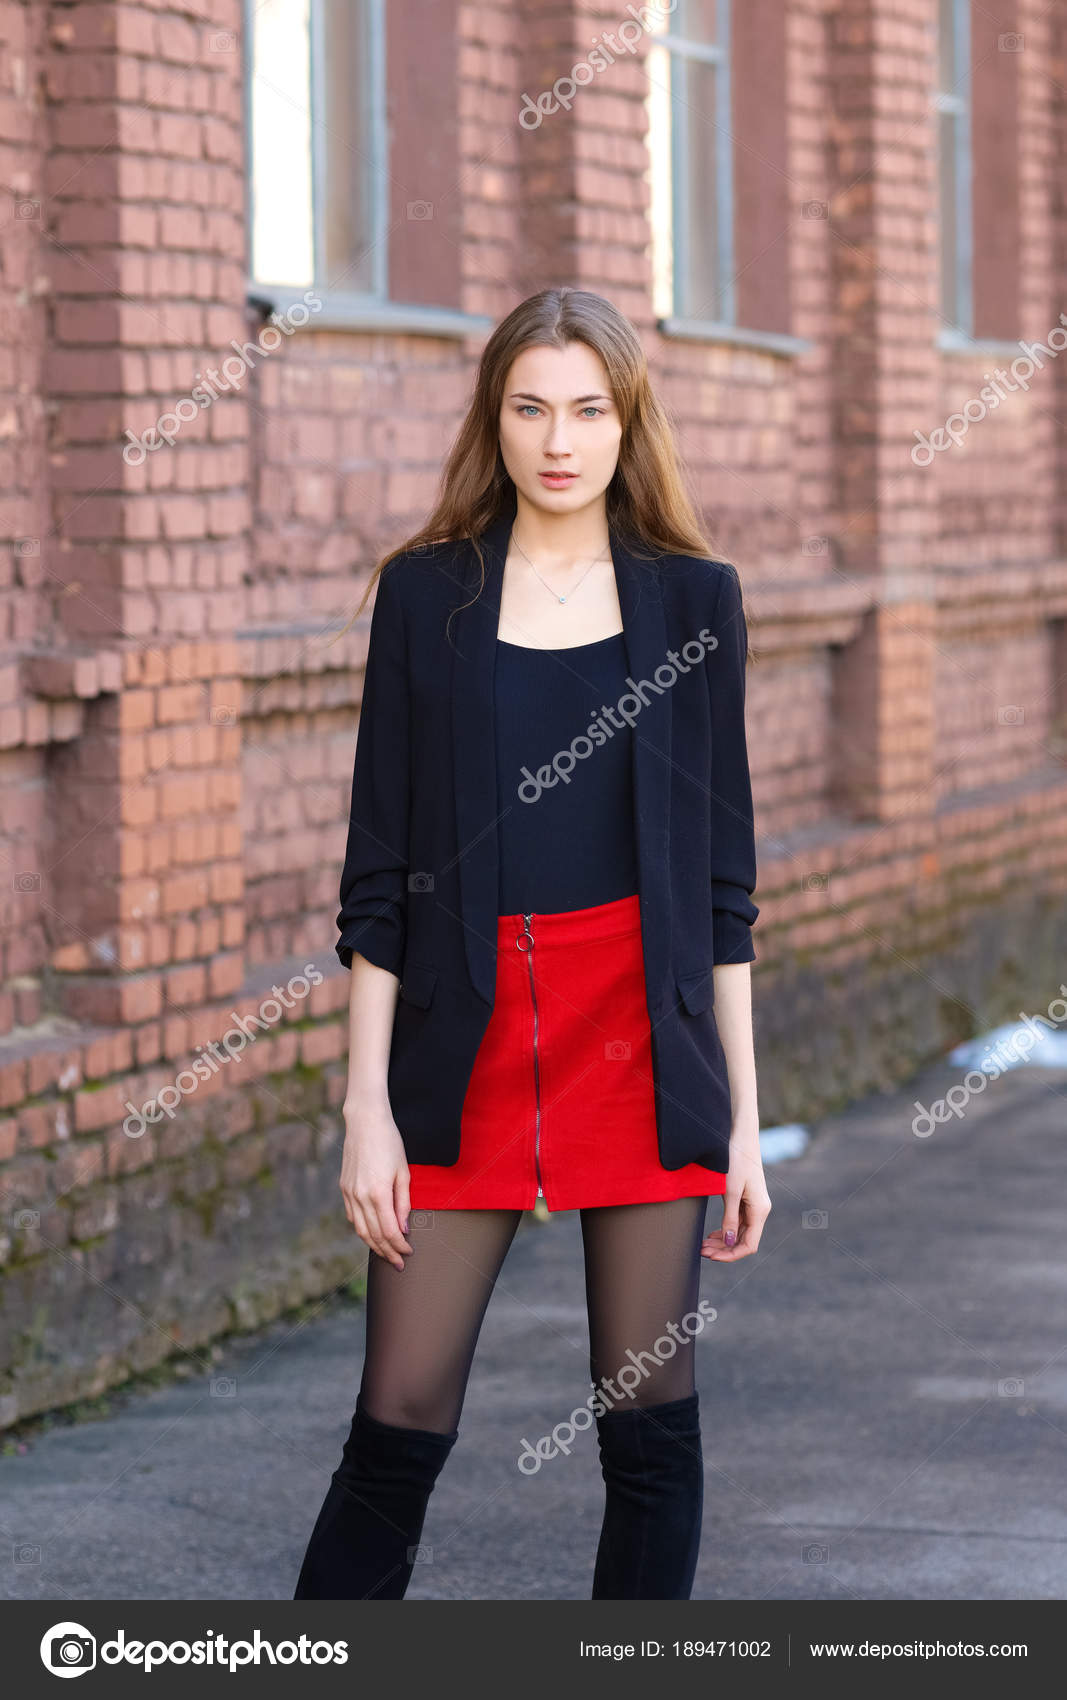 short skirt and jacket